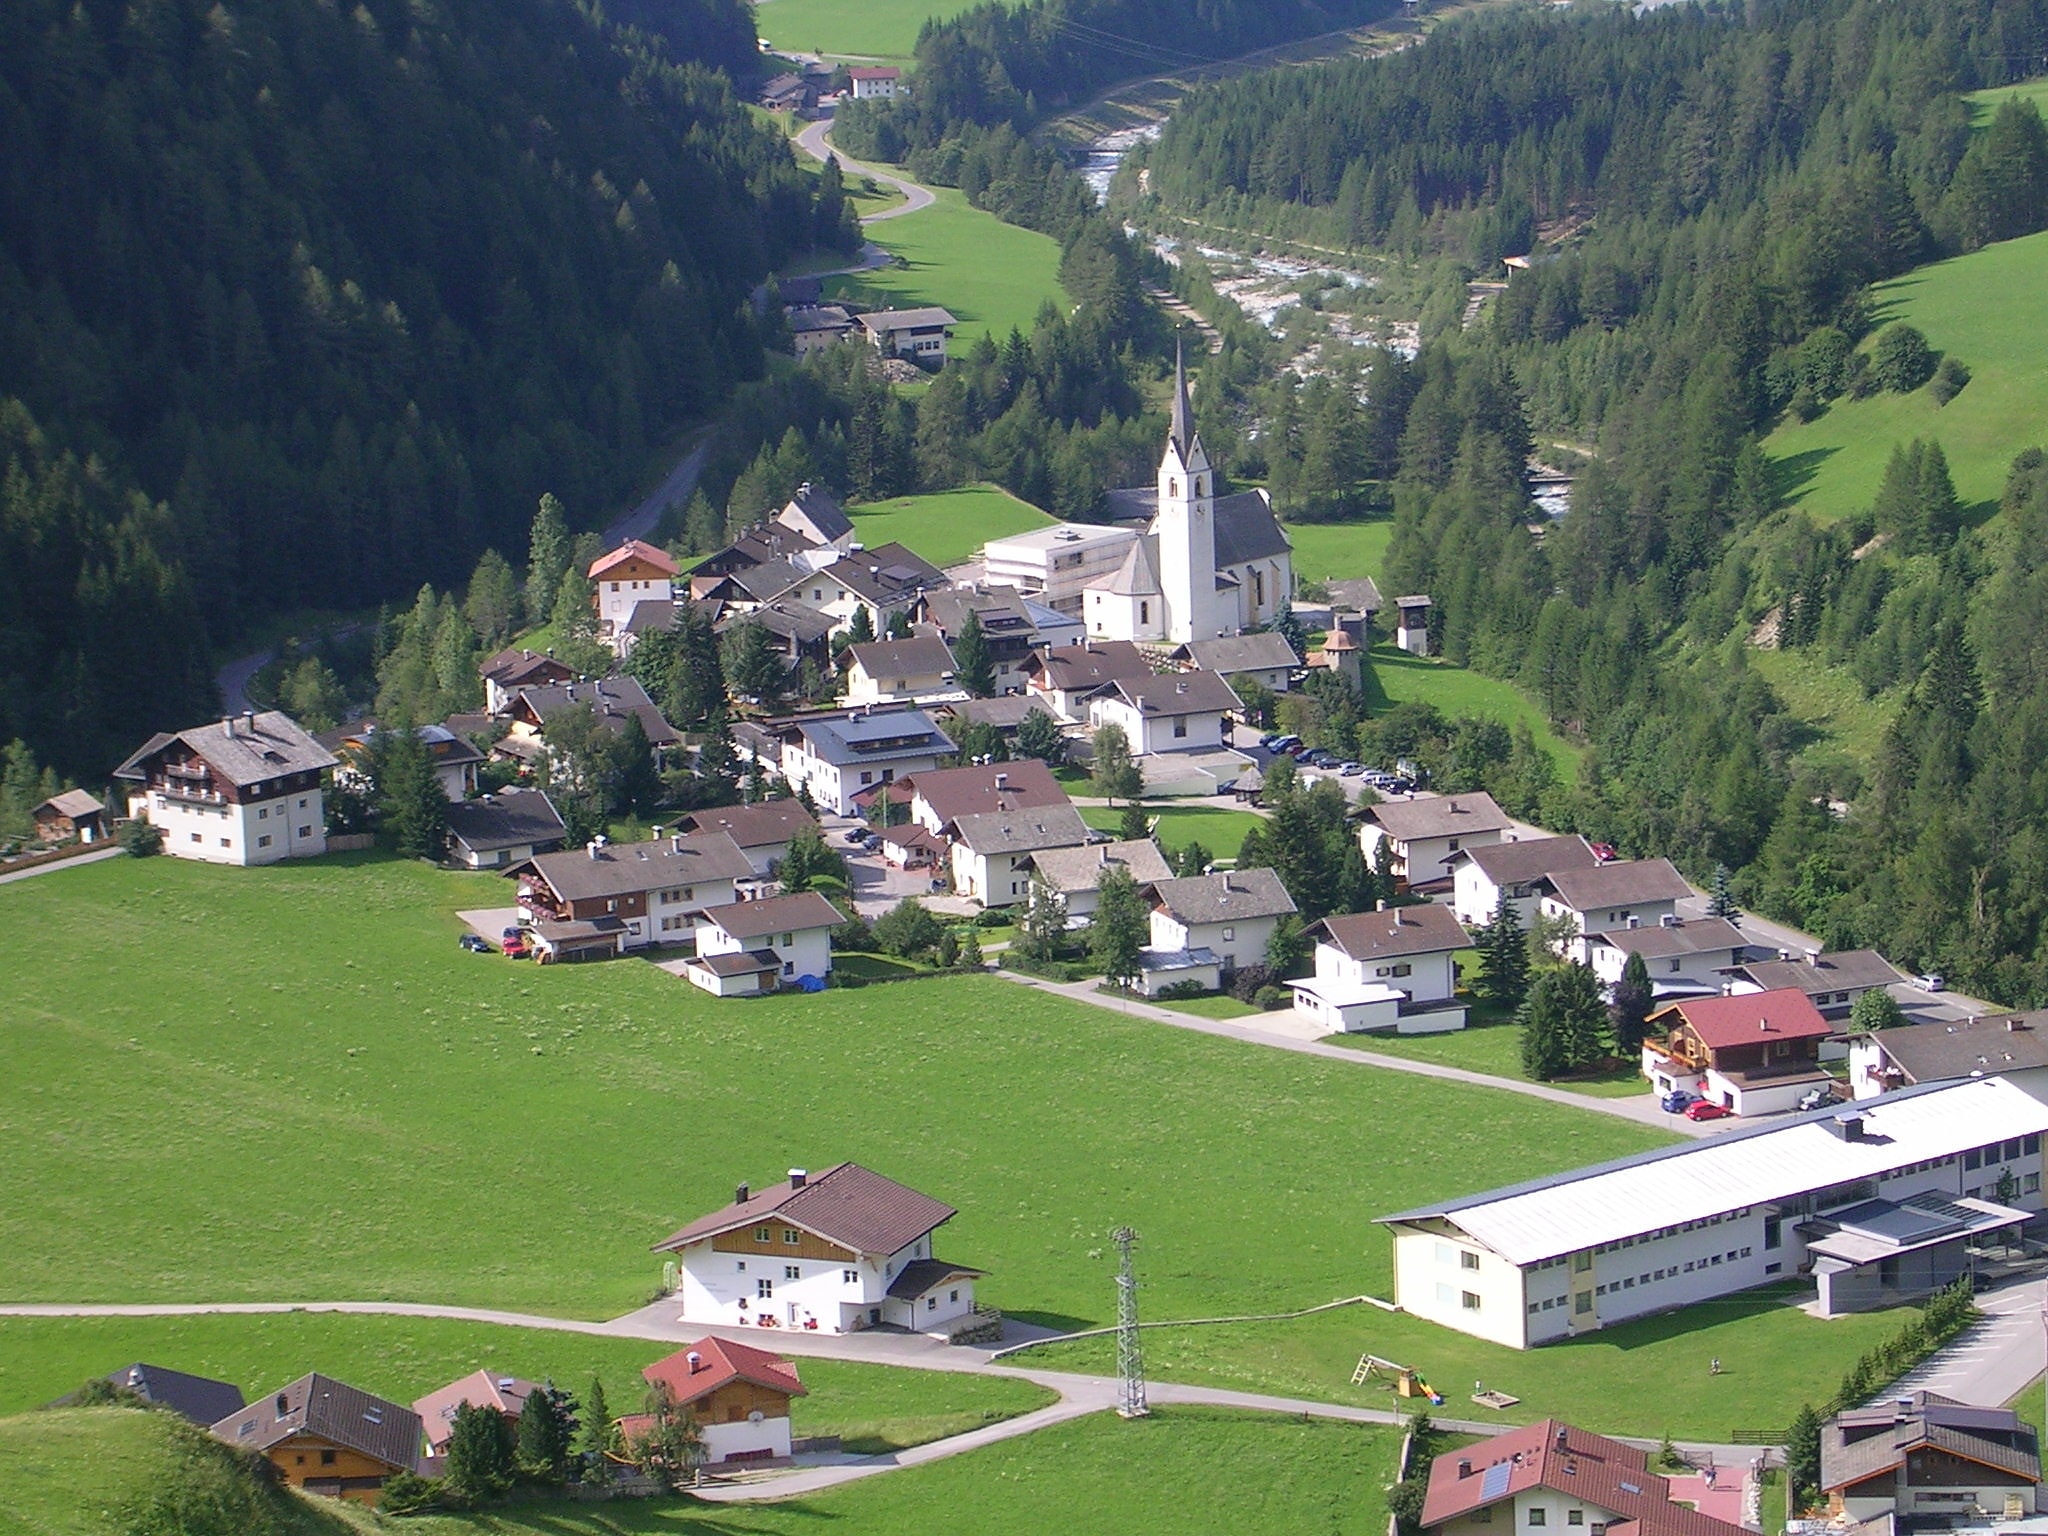 Kals, Austria